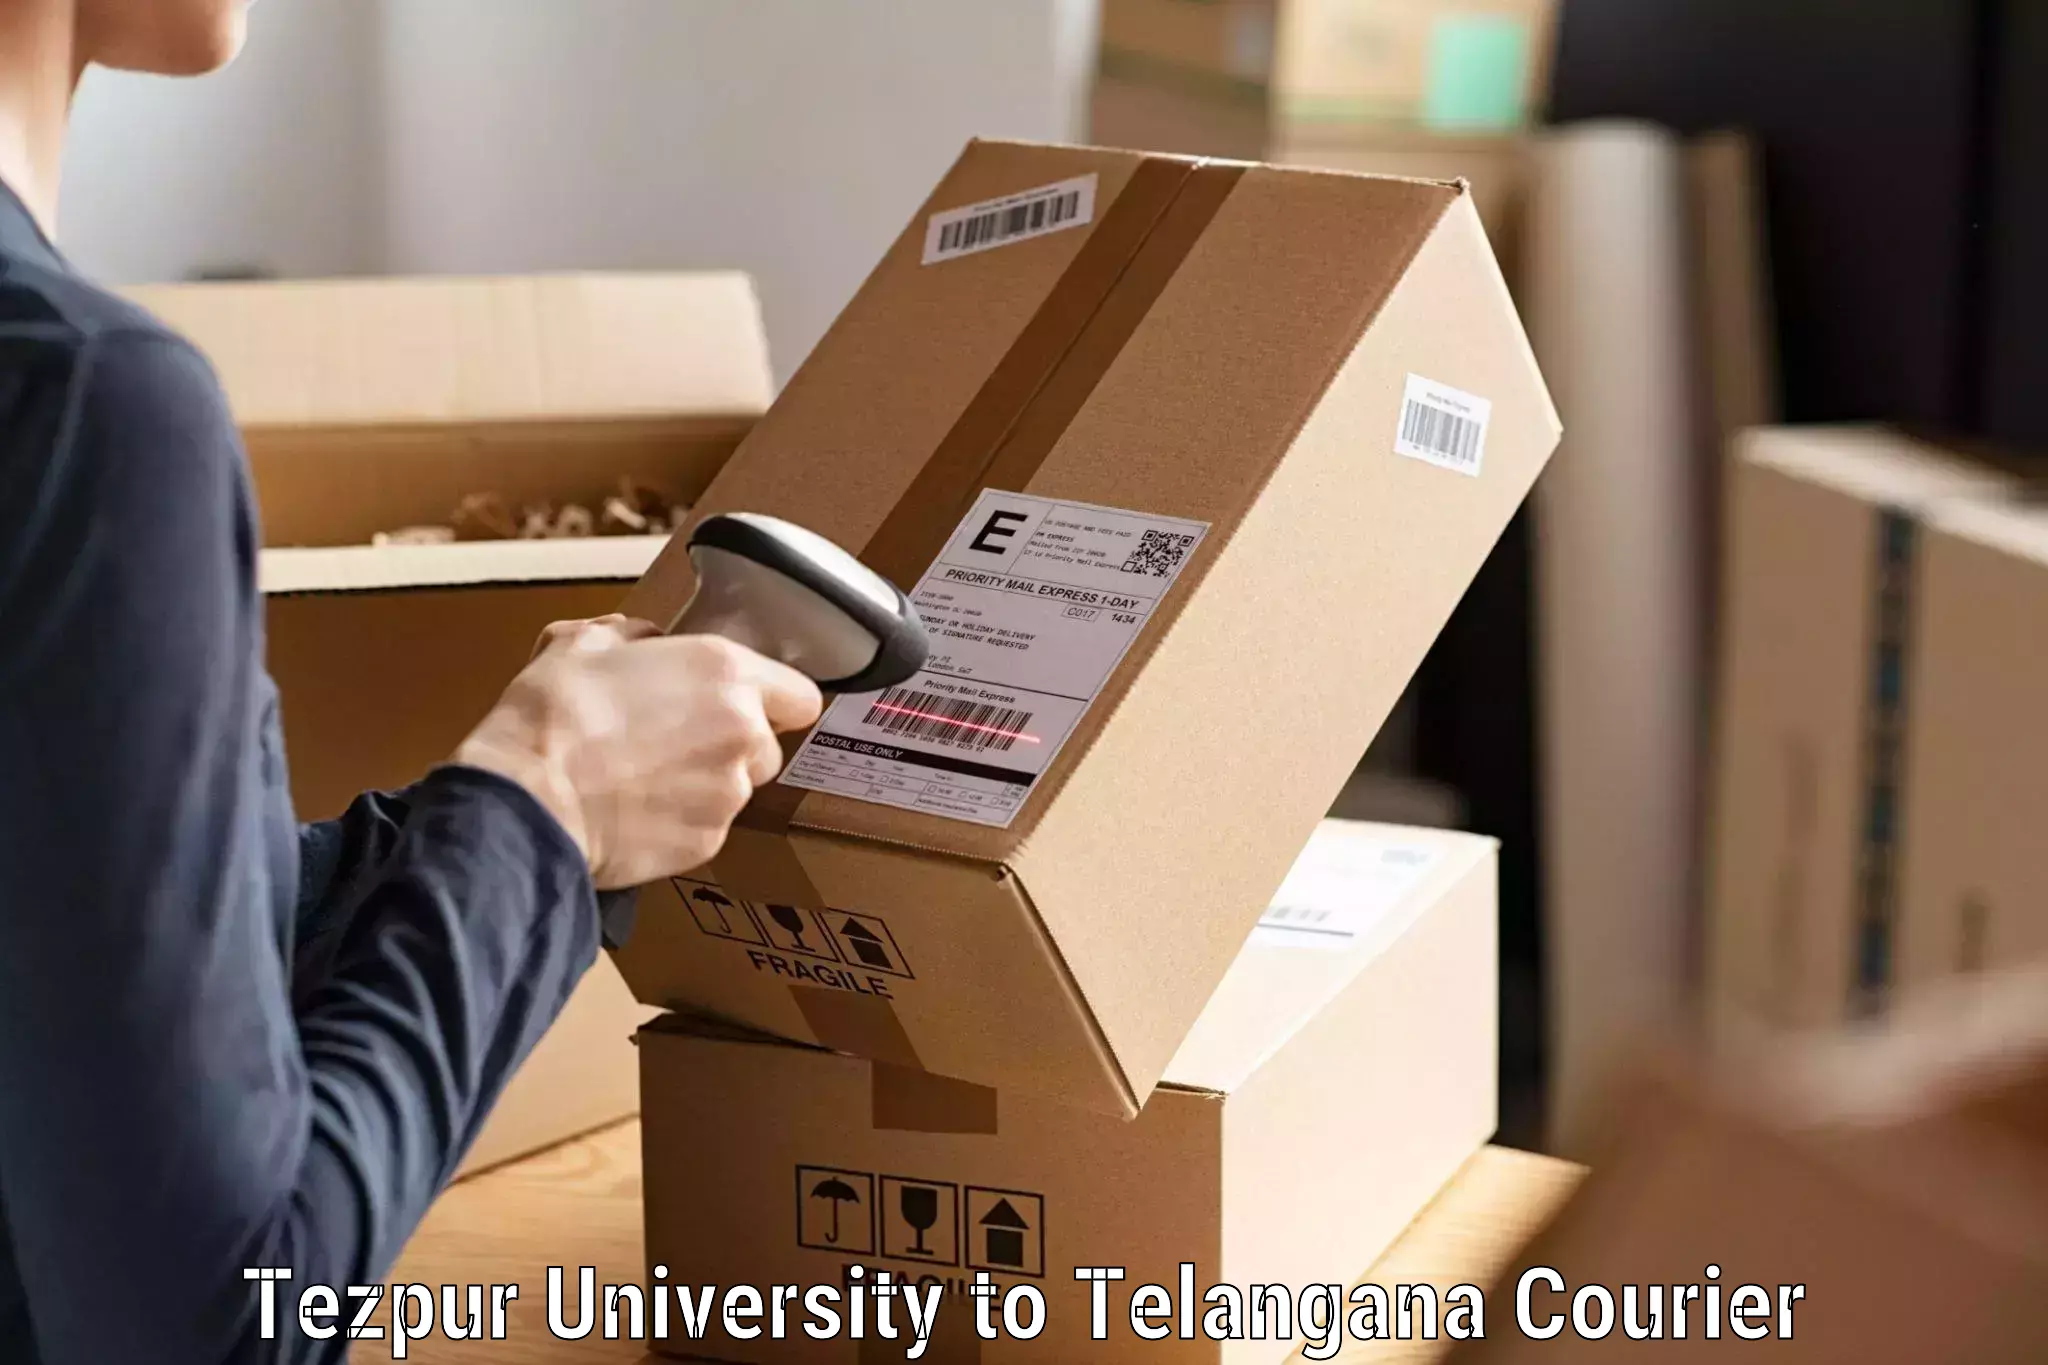 Courier service comparison Tezpur University to Madnoor